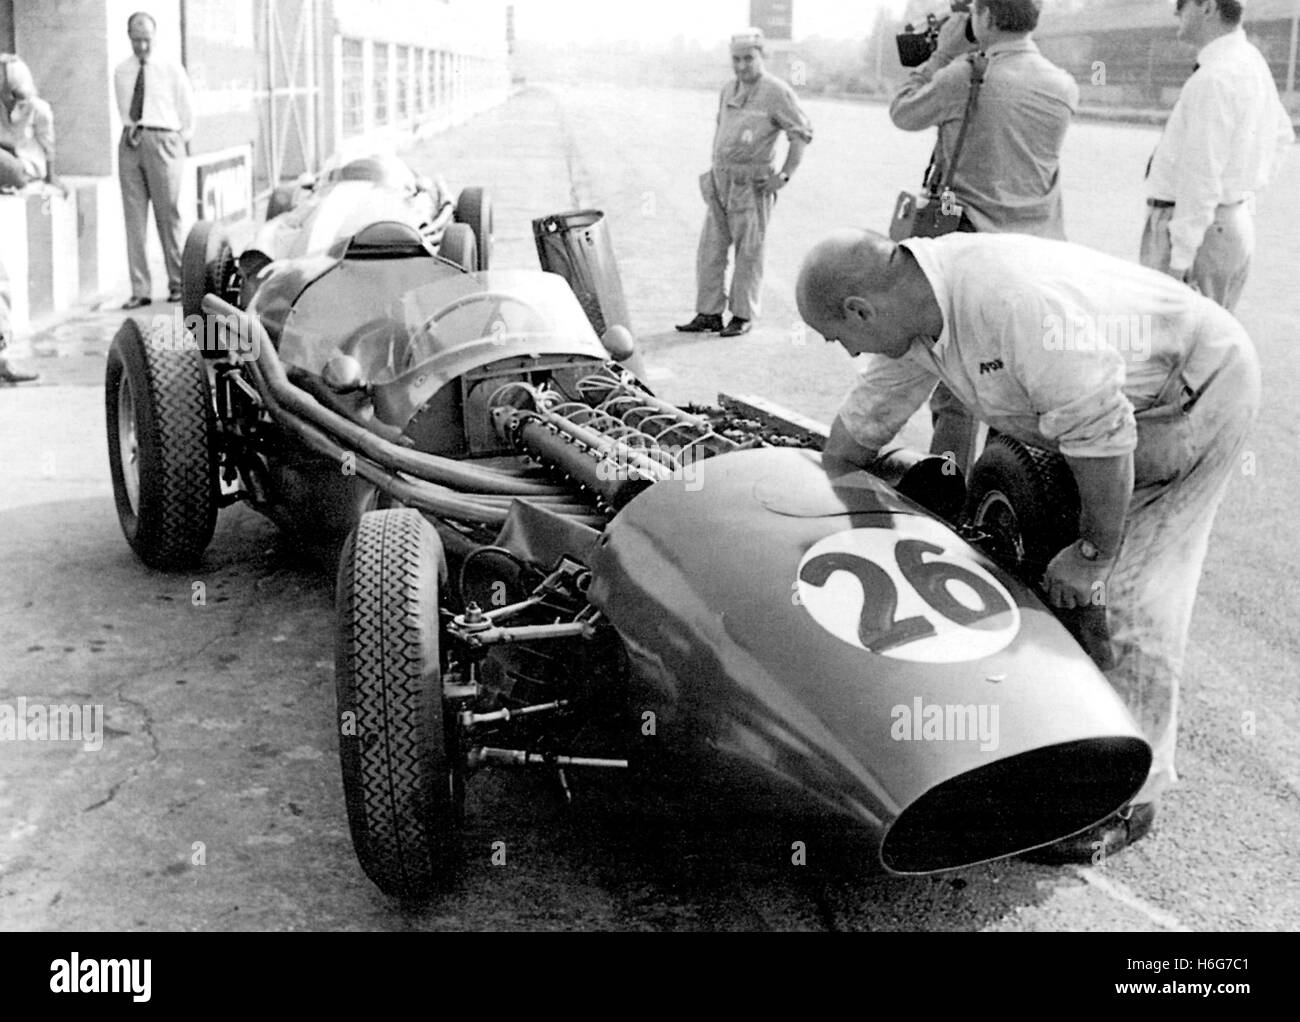 ITALIAN GP SHELBY ASTON MARTIN DBR4-250 PITS Monza 1959 Stock Photo